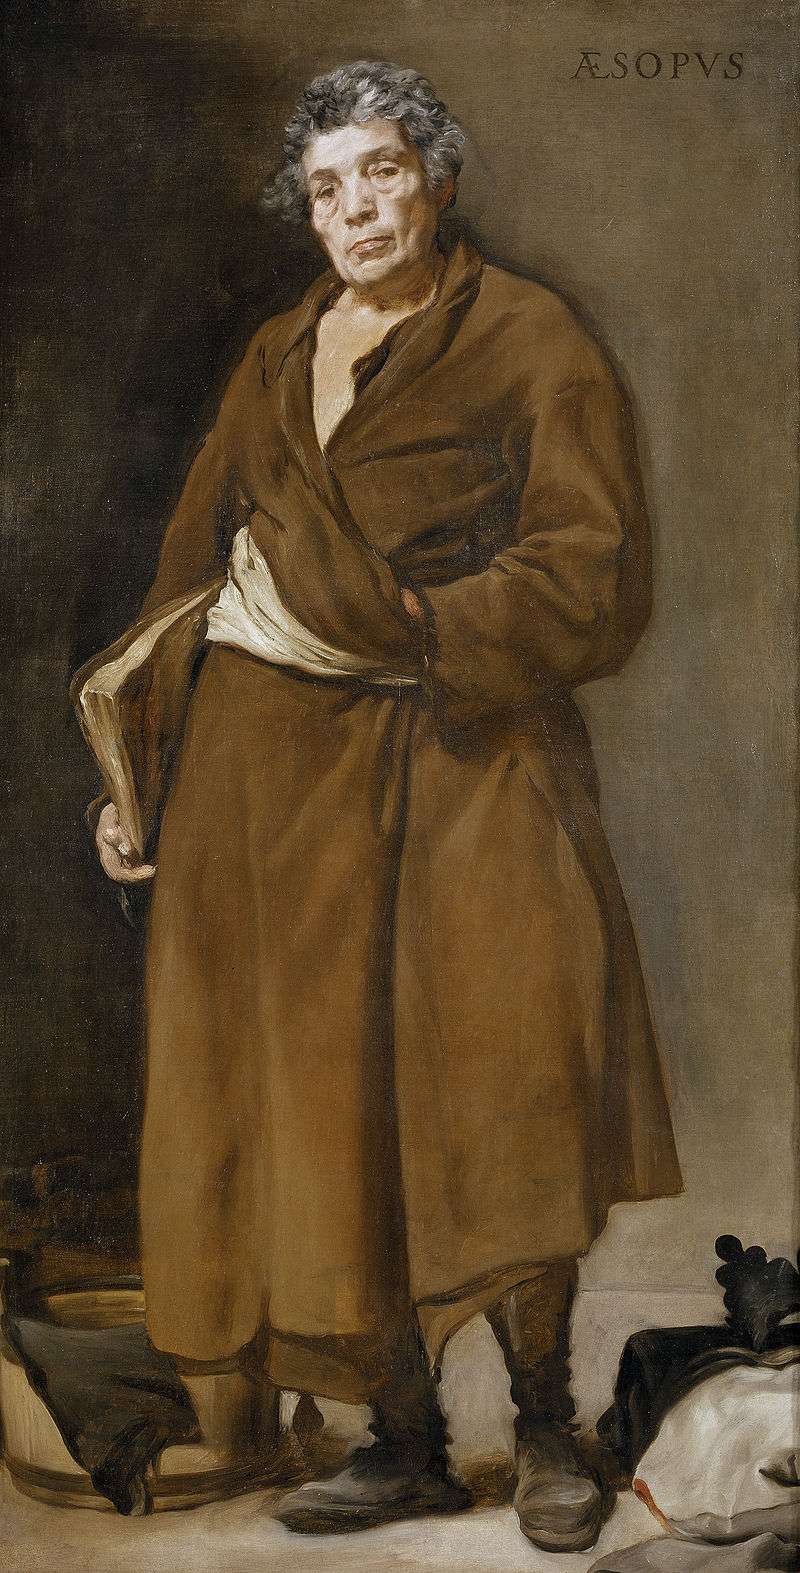 Portrait of Aesop by Velázquez in the Prado.